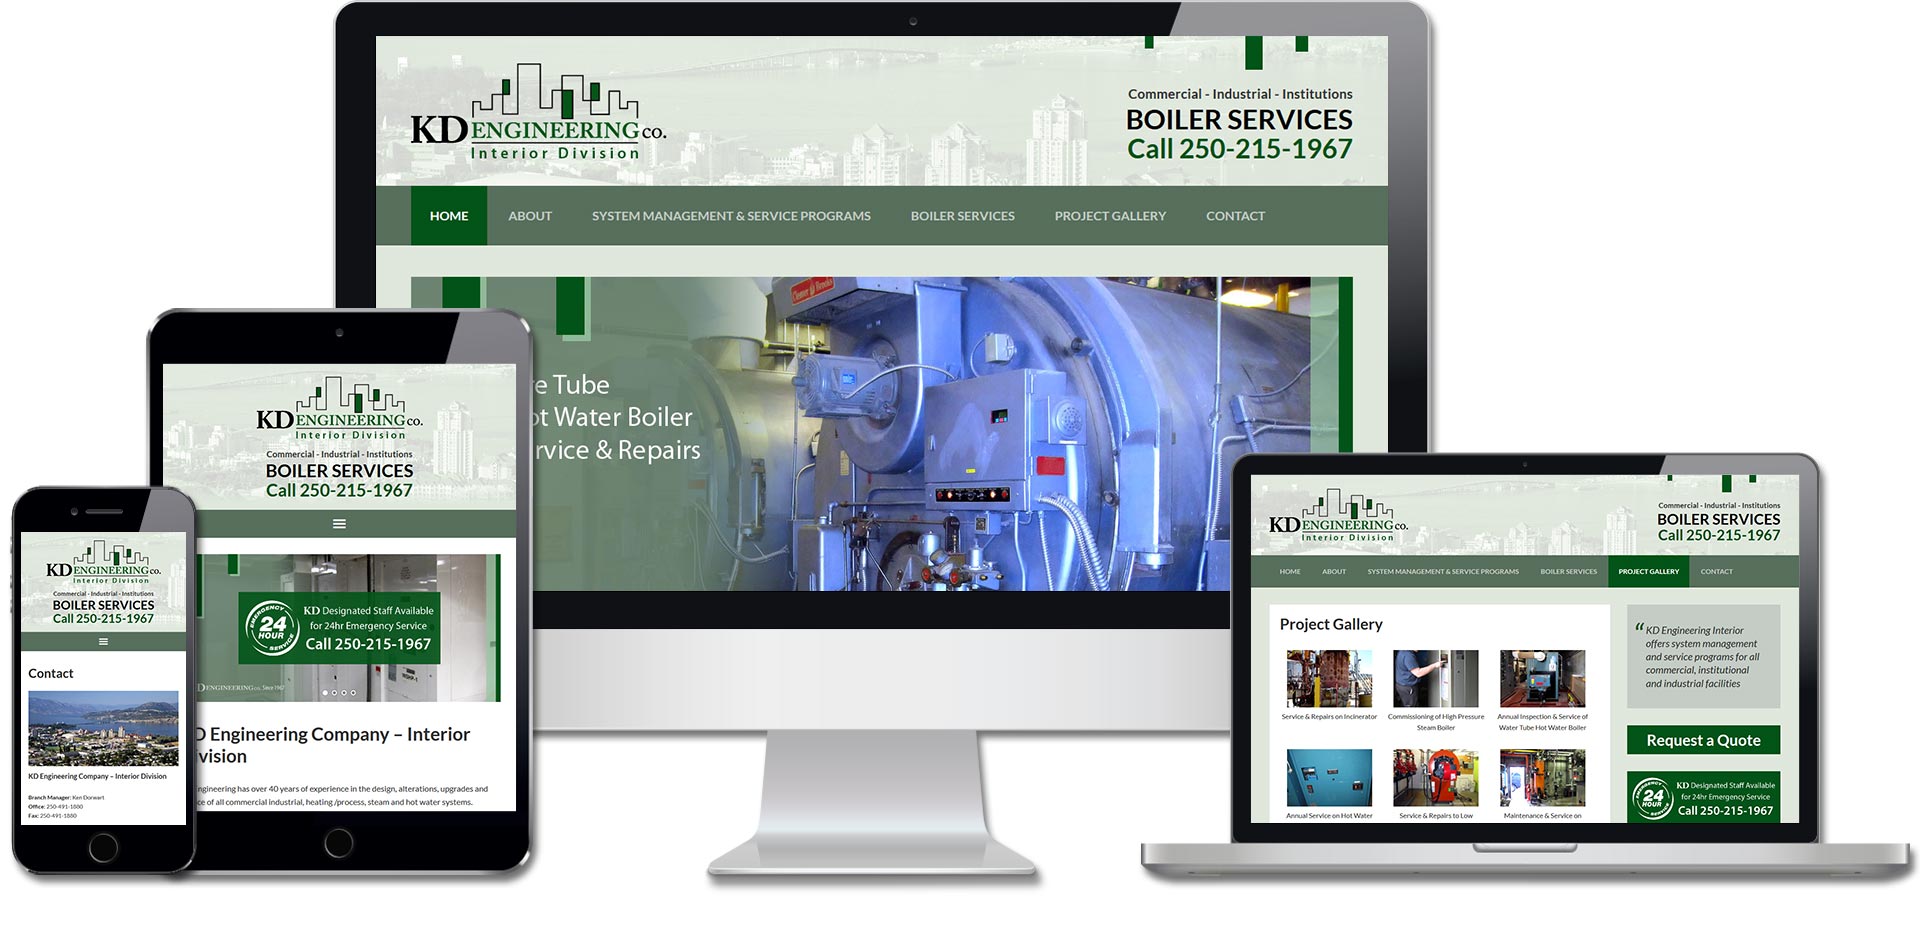 KD Engineering Boiler Services Website